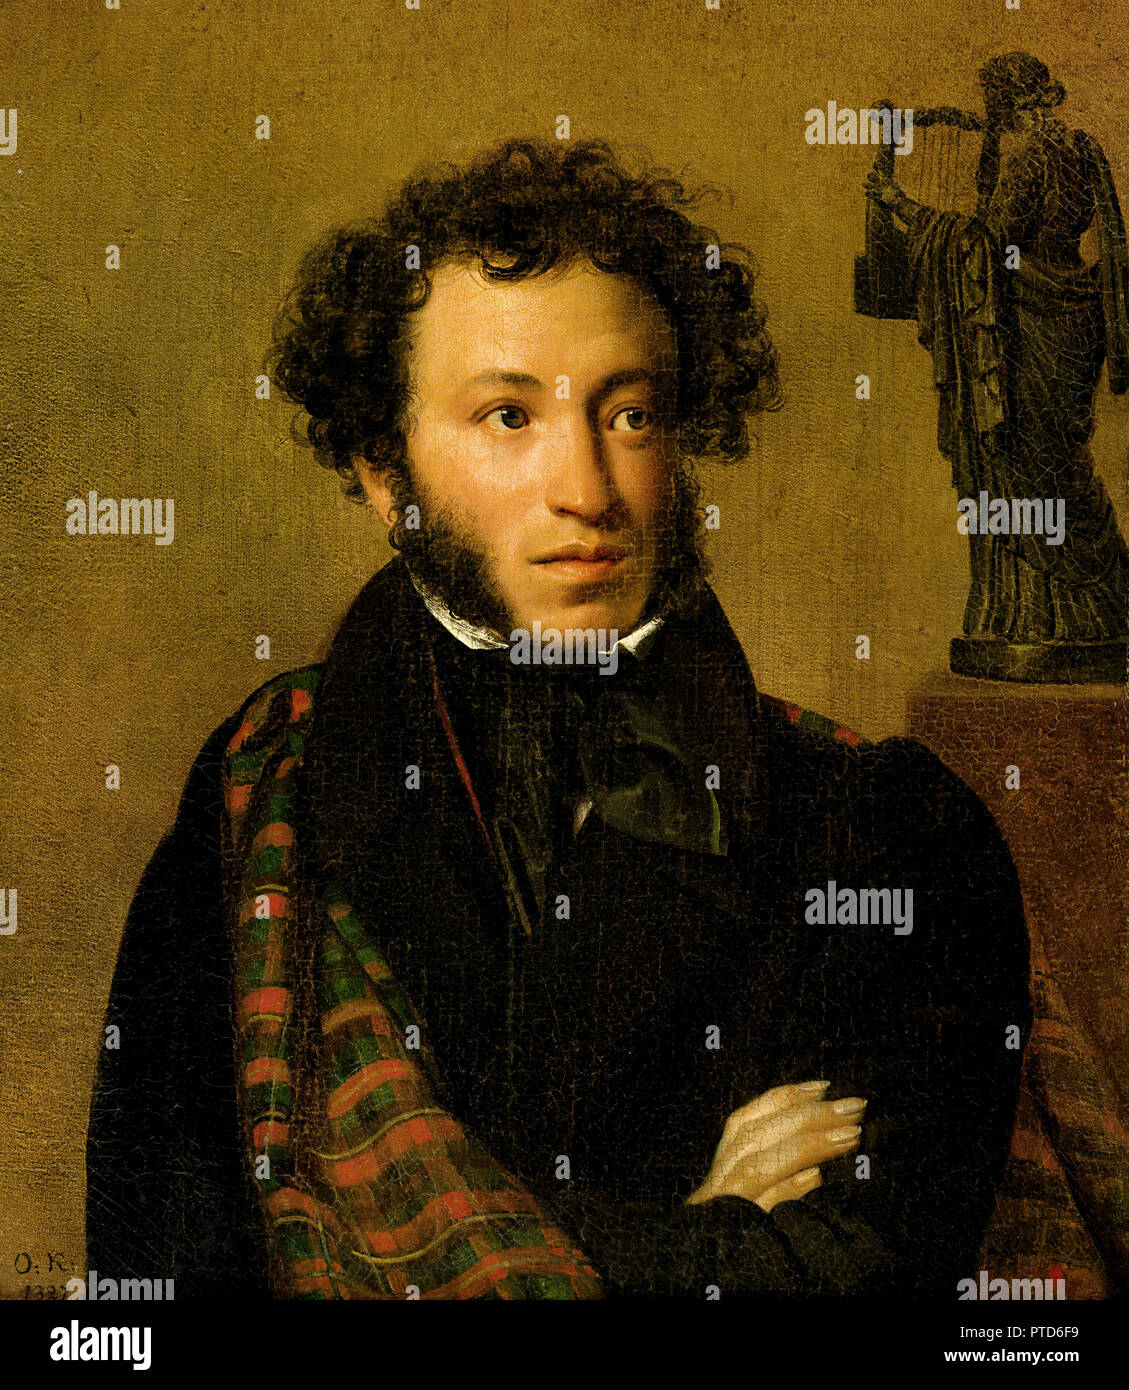 Orest Kiprensky, Portrait von A.S. Puschkin 1827 Öl auf Leinwand, Tretjakow-Galerie, Moskau, Russland. Stockfoto